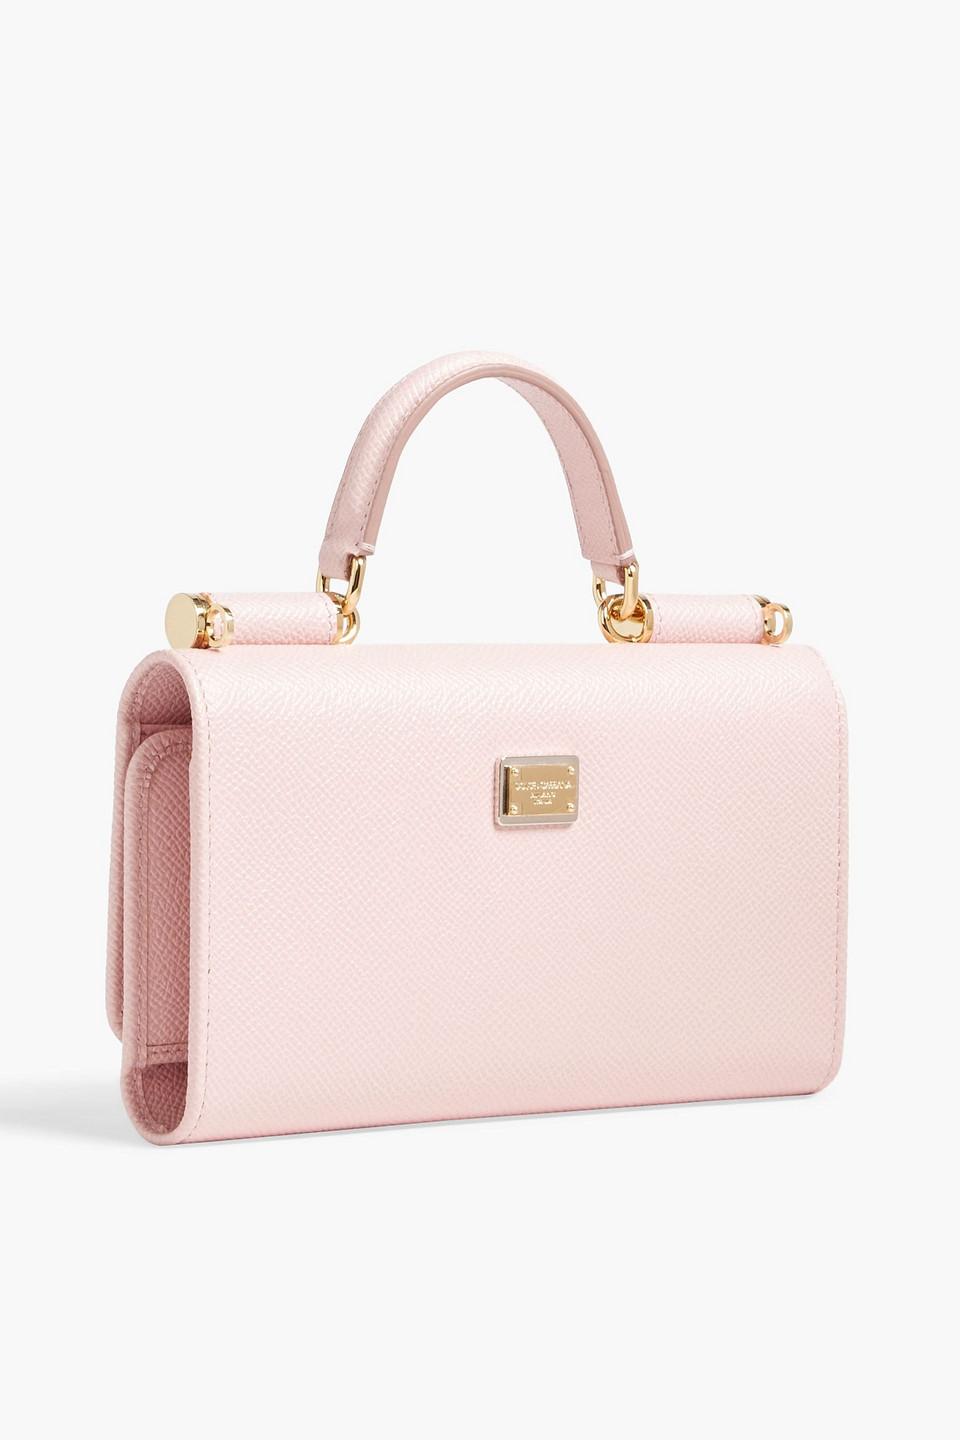 Dolce & Gabbana Appliquéd Textured-leather Phone Bag in Pink | Lyst